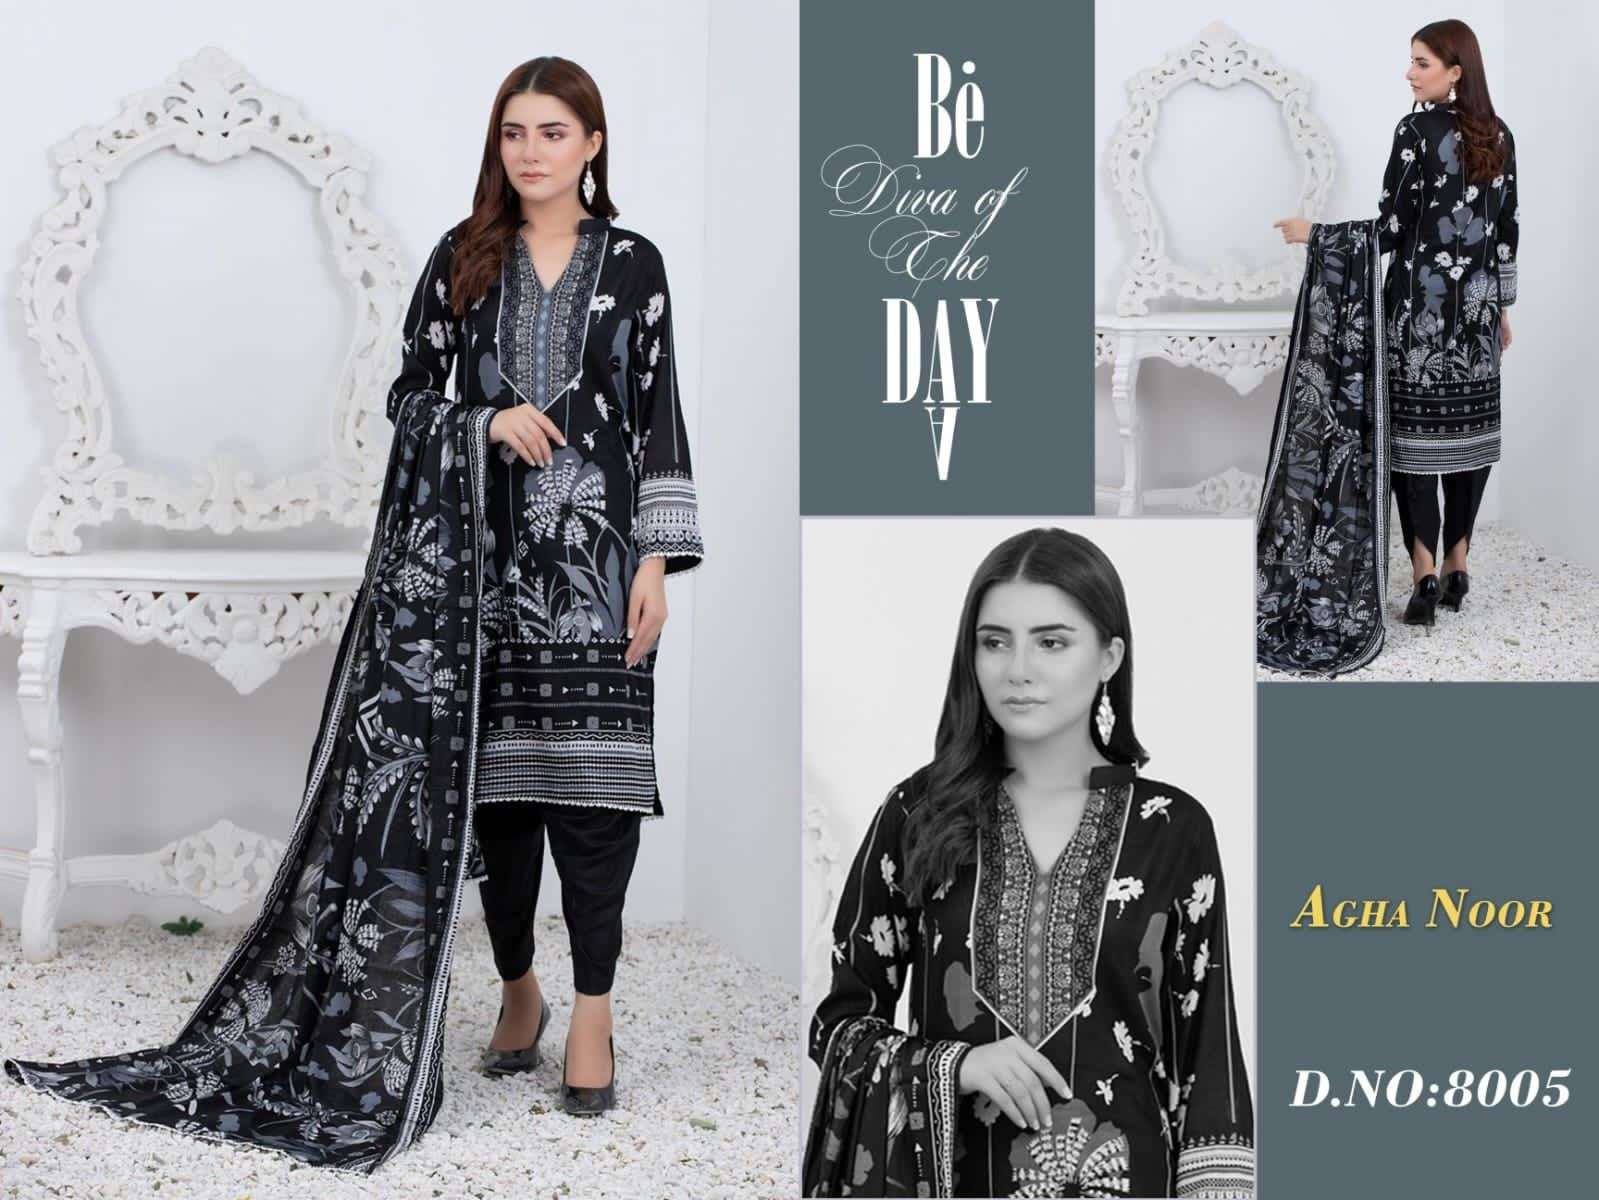 agha noor luxury lawn collection vol-8 8001-8006 series cotton designer salwar kameez online shopping surat